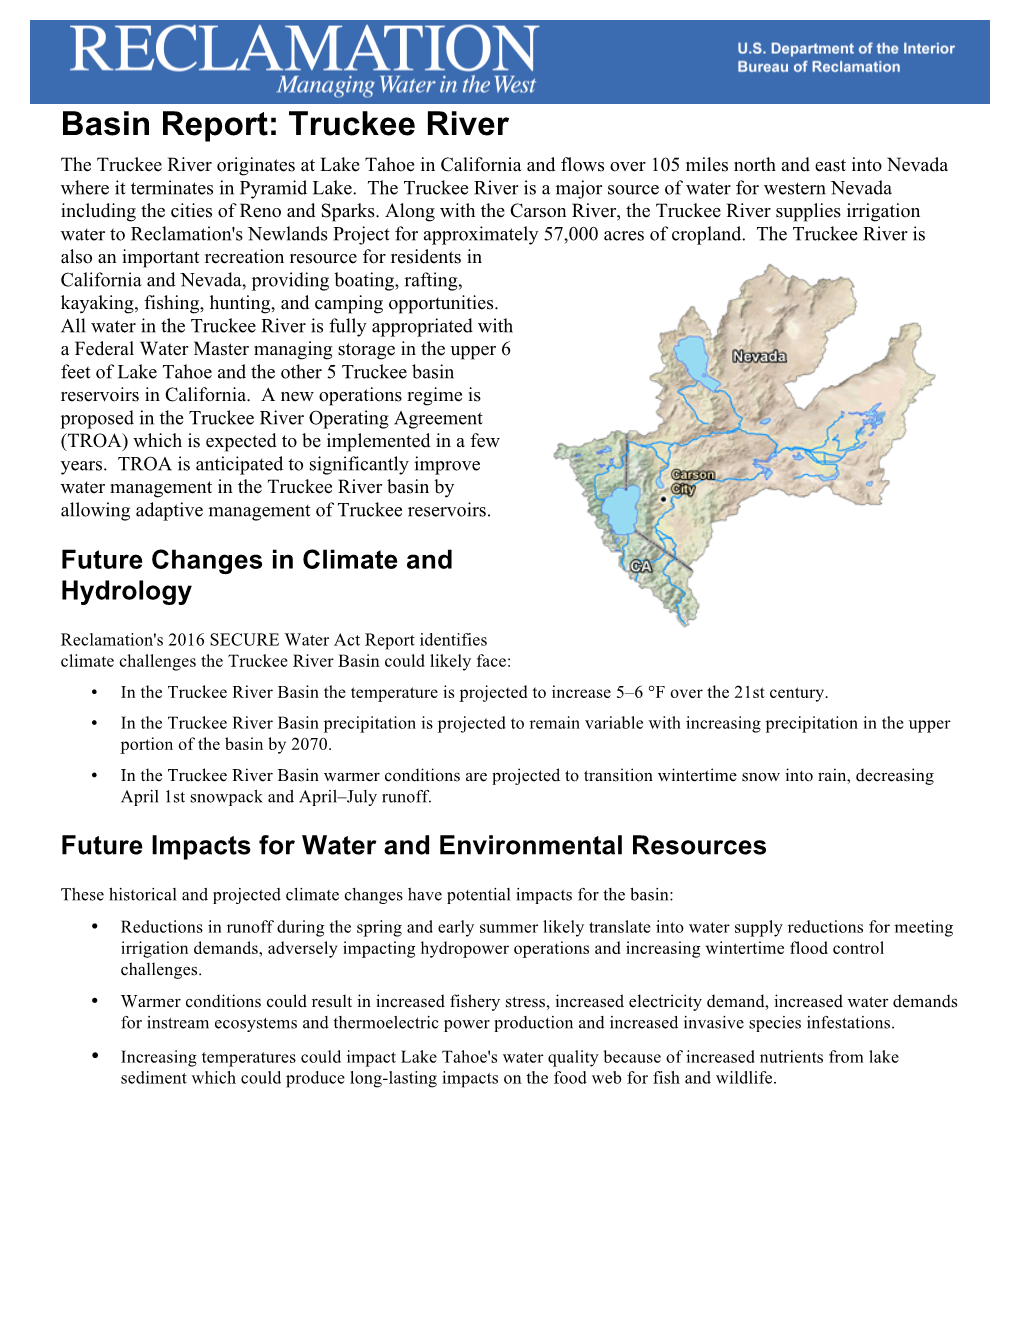 Truckee River Basin Fact Sheet